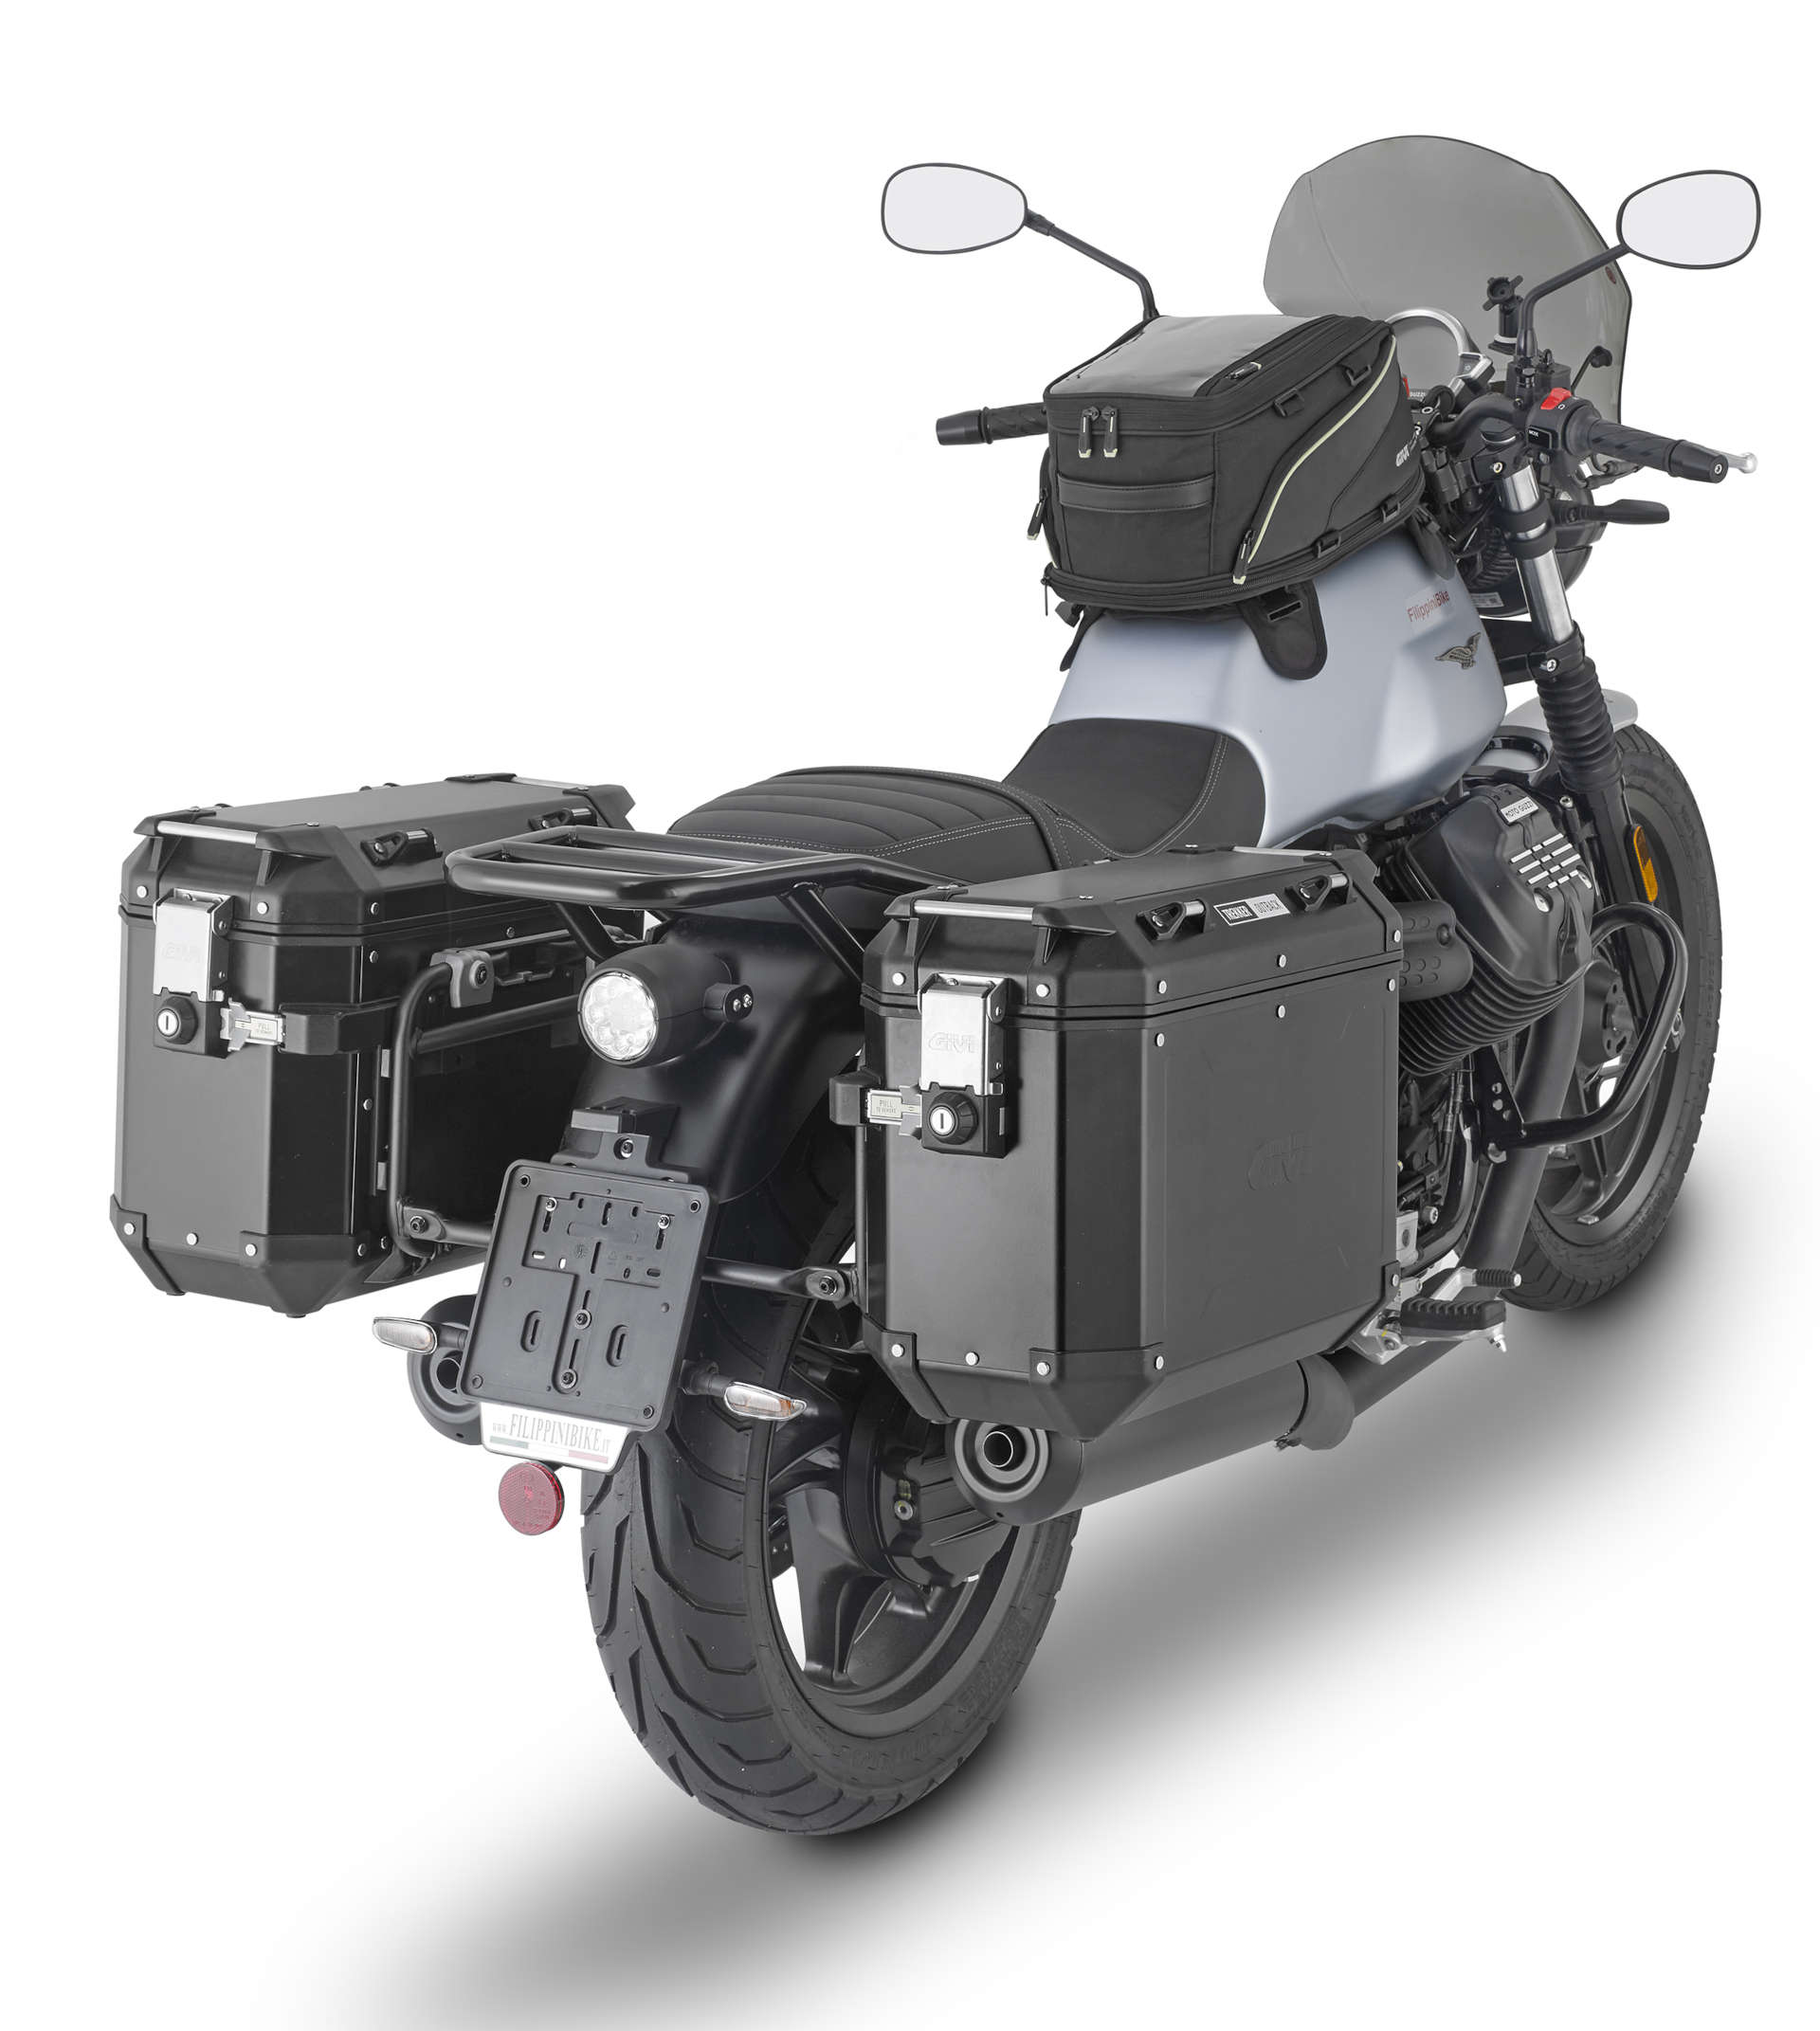 Porte-topcase pour Moto Guzzi V7 III Original Givi